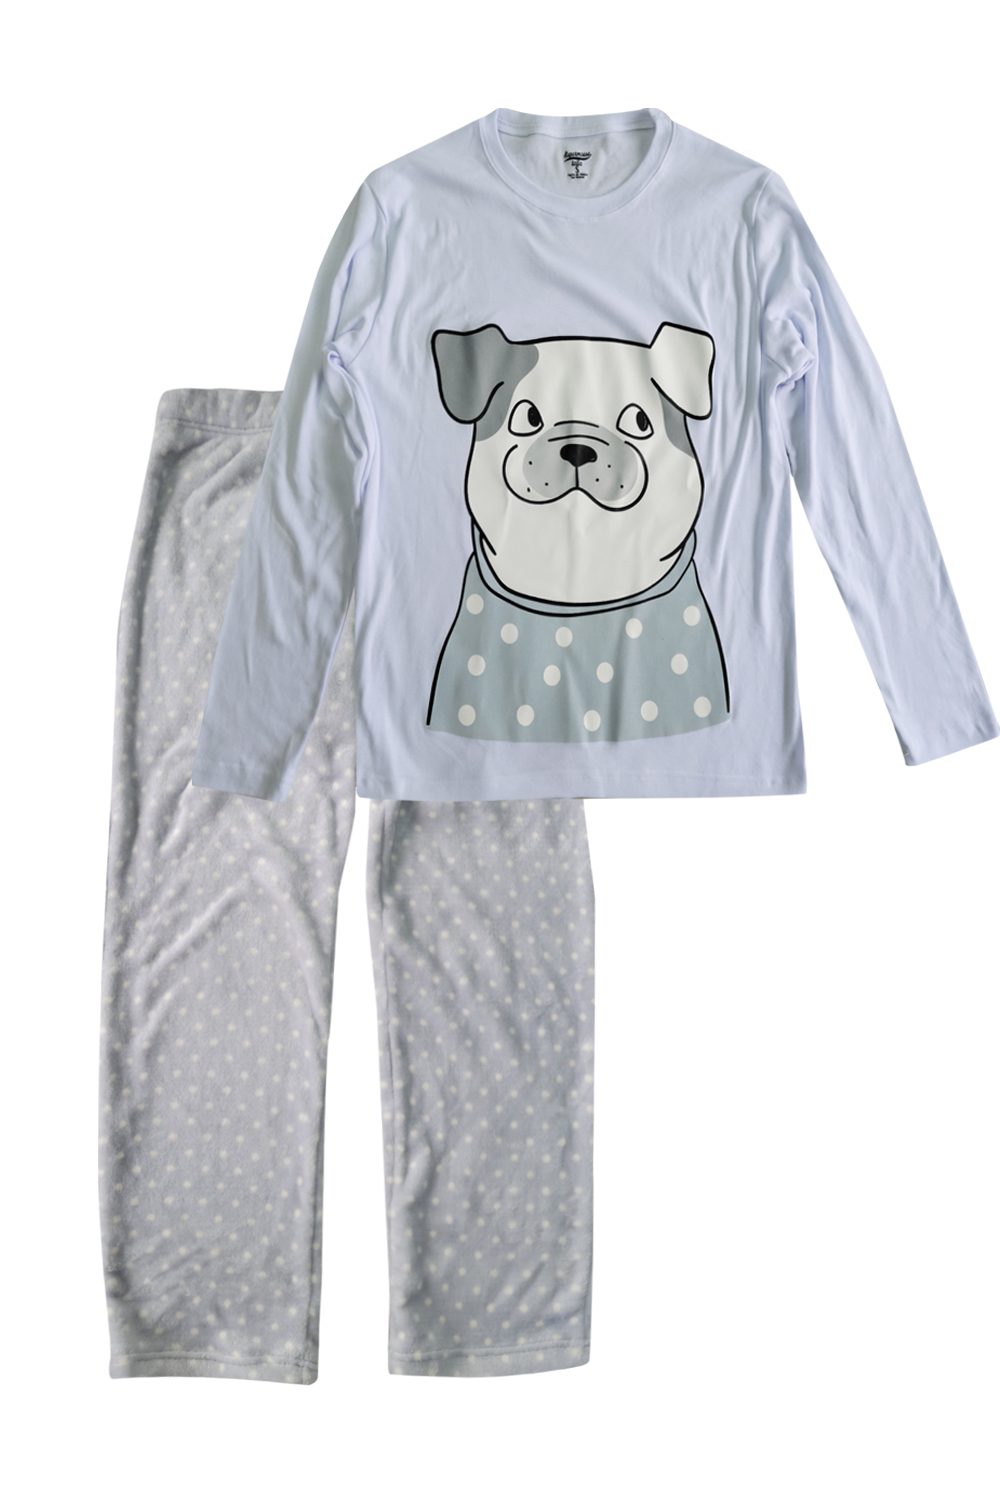 Pijama Polar Caballero. Perro